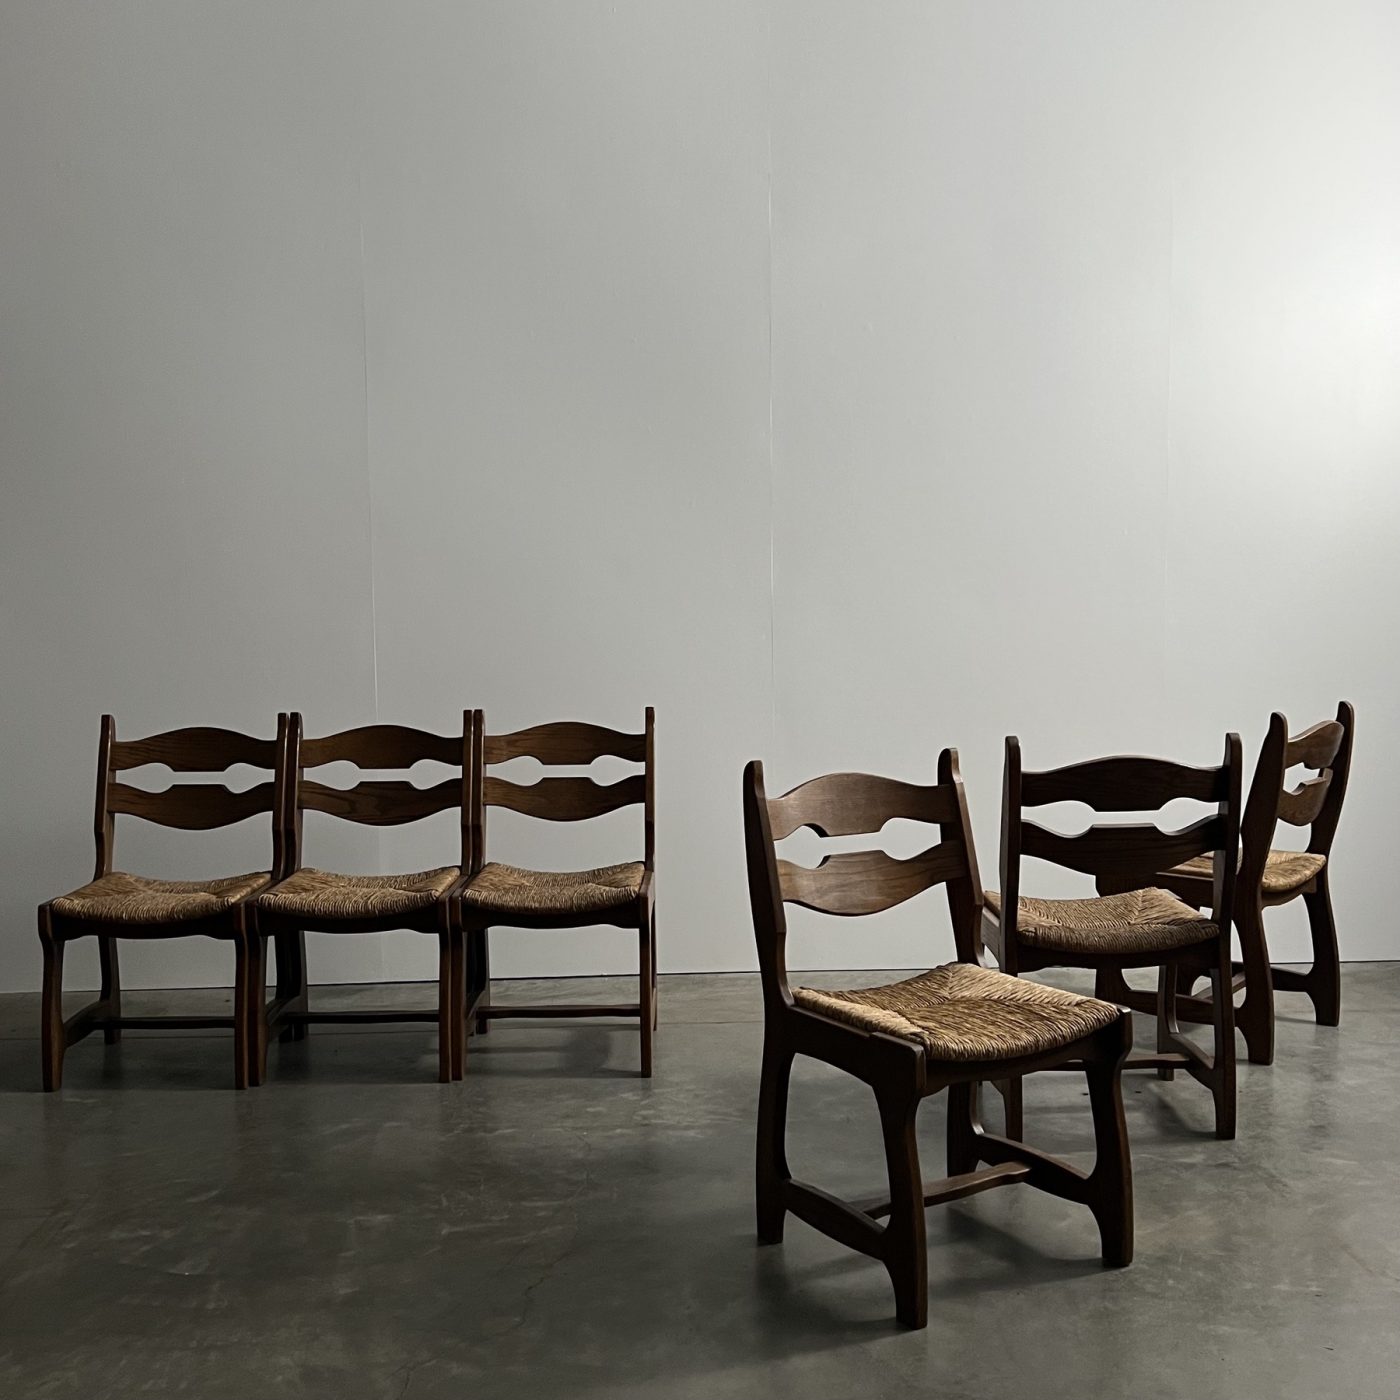 objet-vagabond-oak-chairs0002